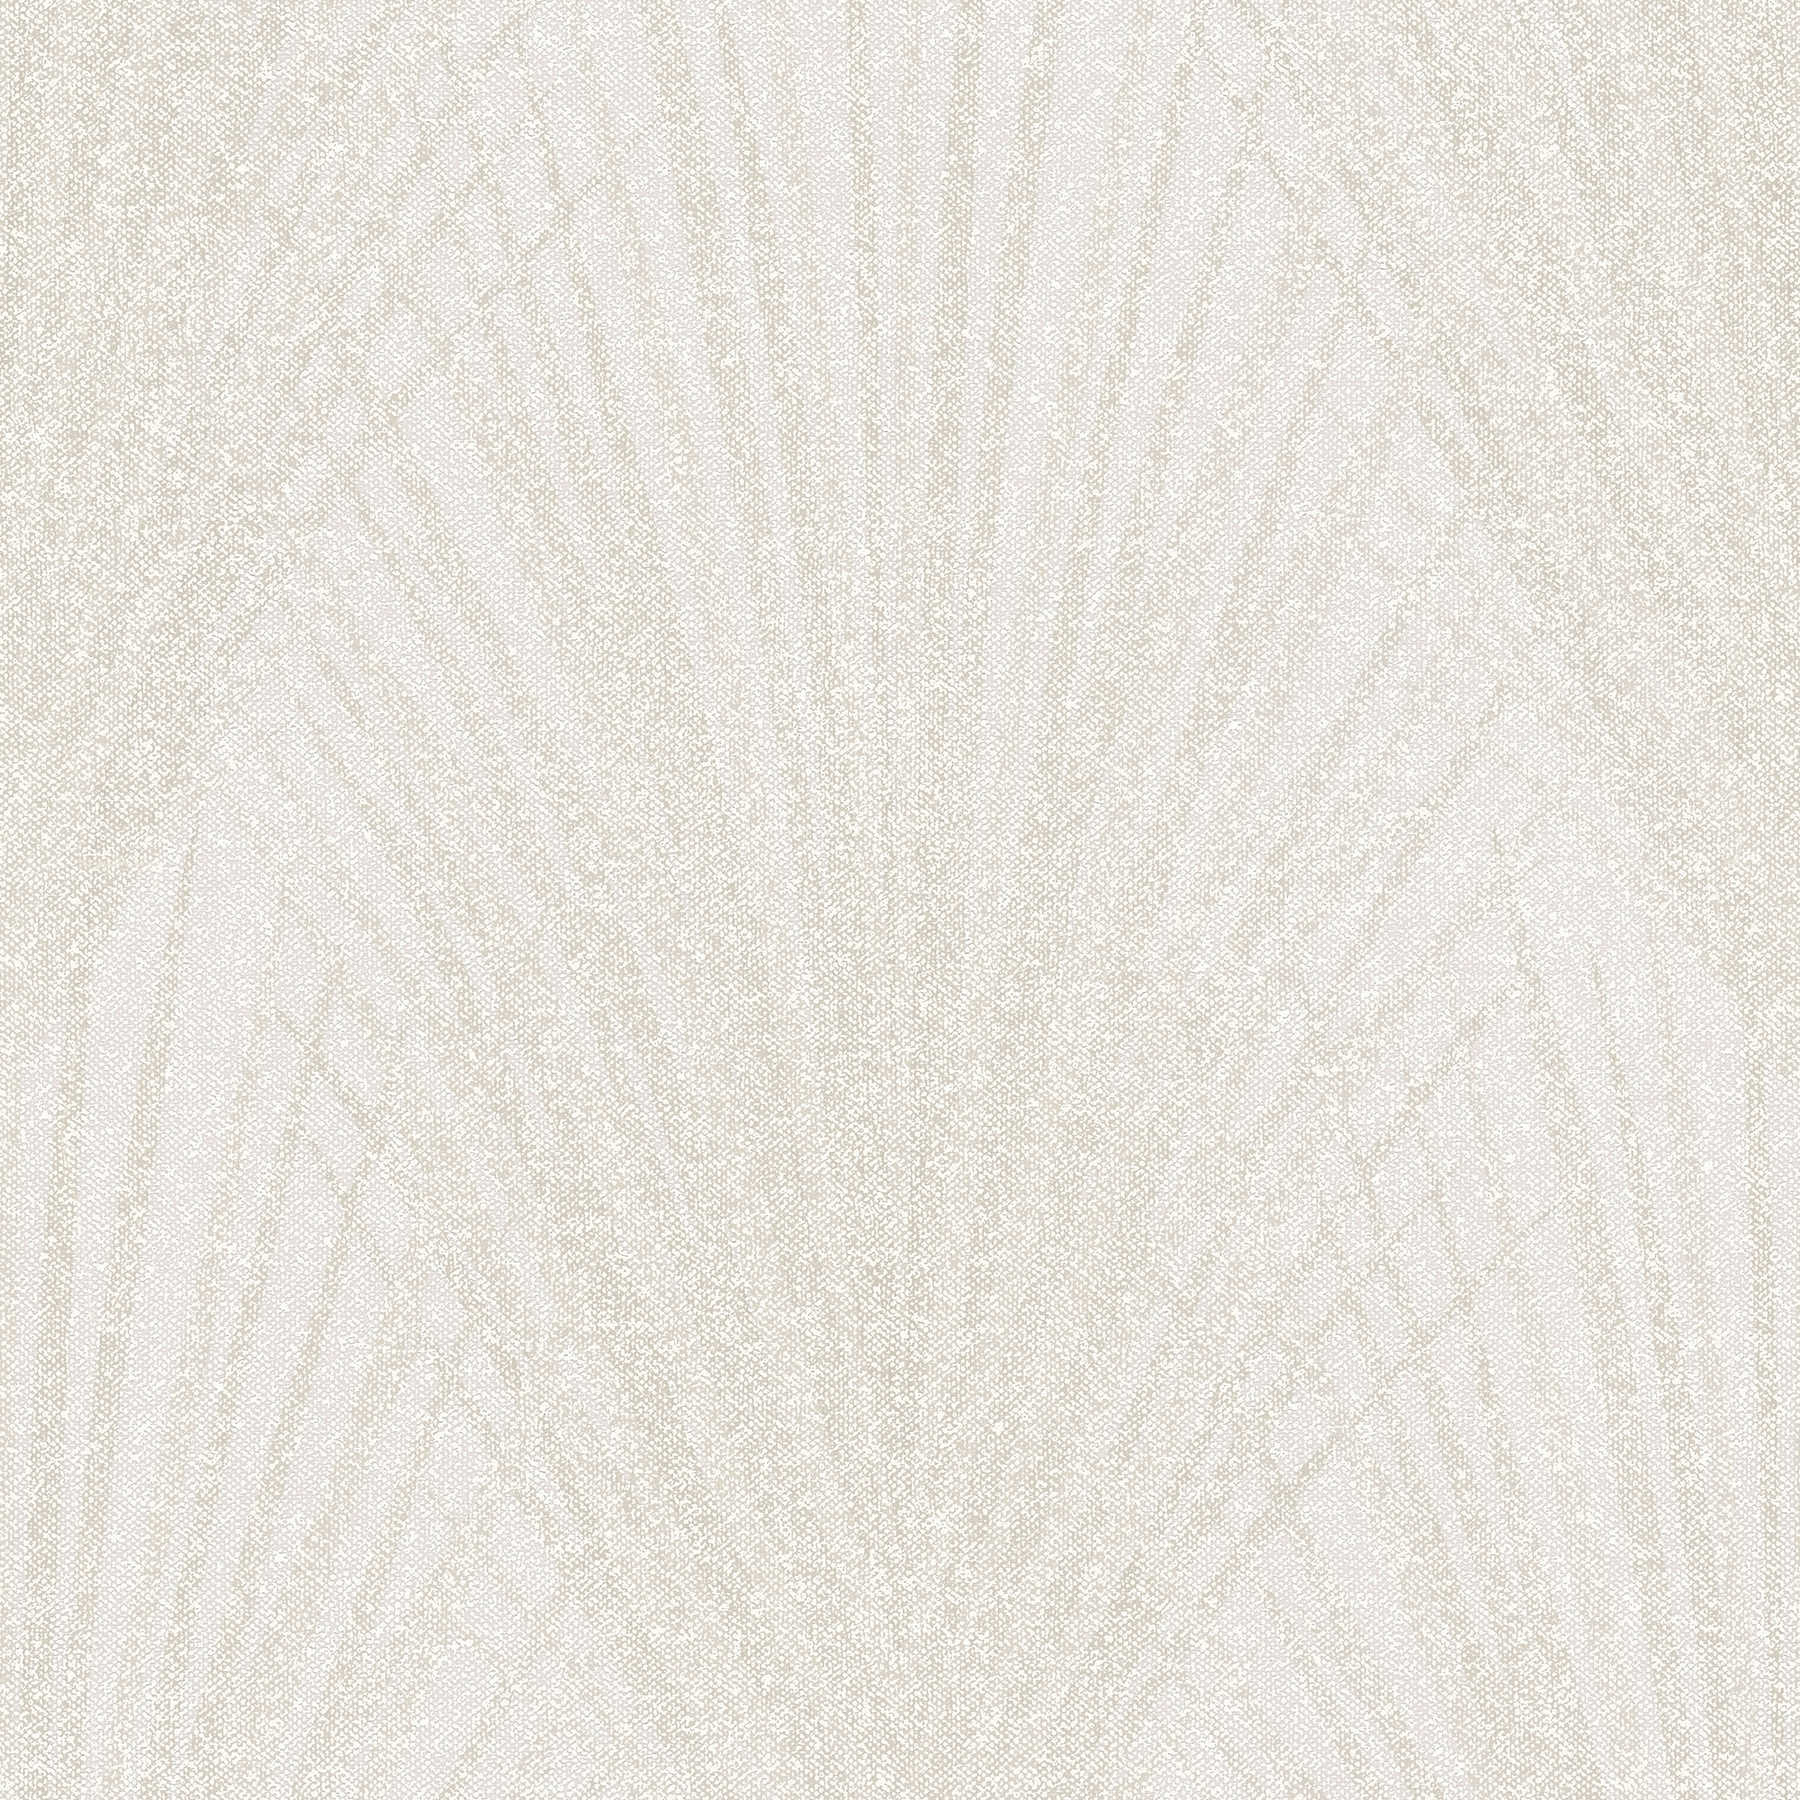         Varenbladpatroon behang abstract ontwerp - crème, beige
    